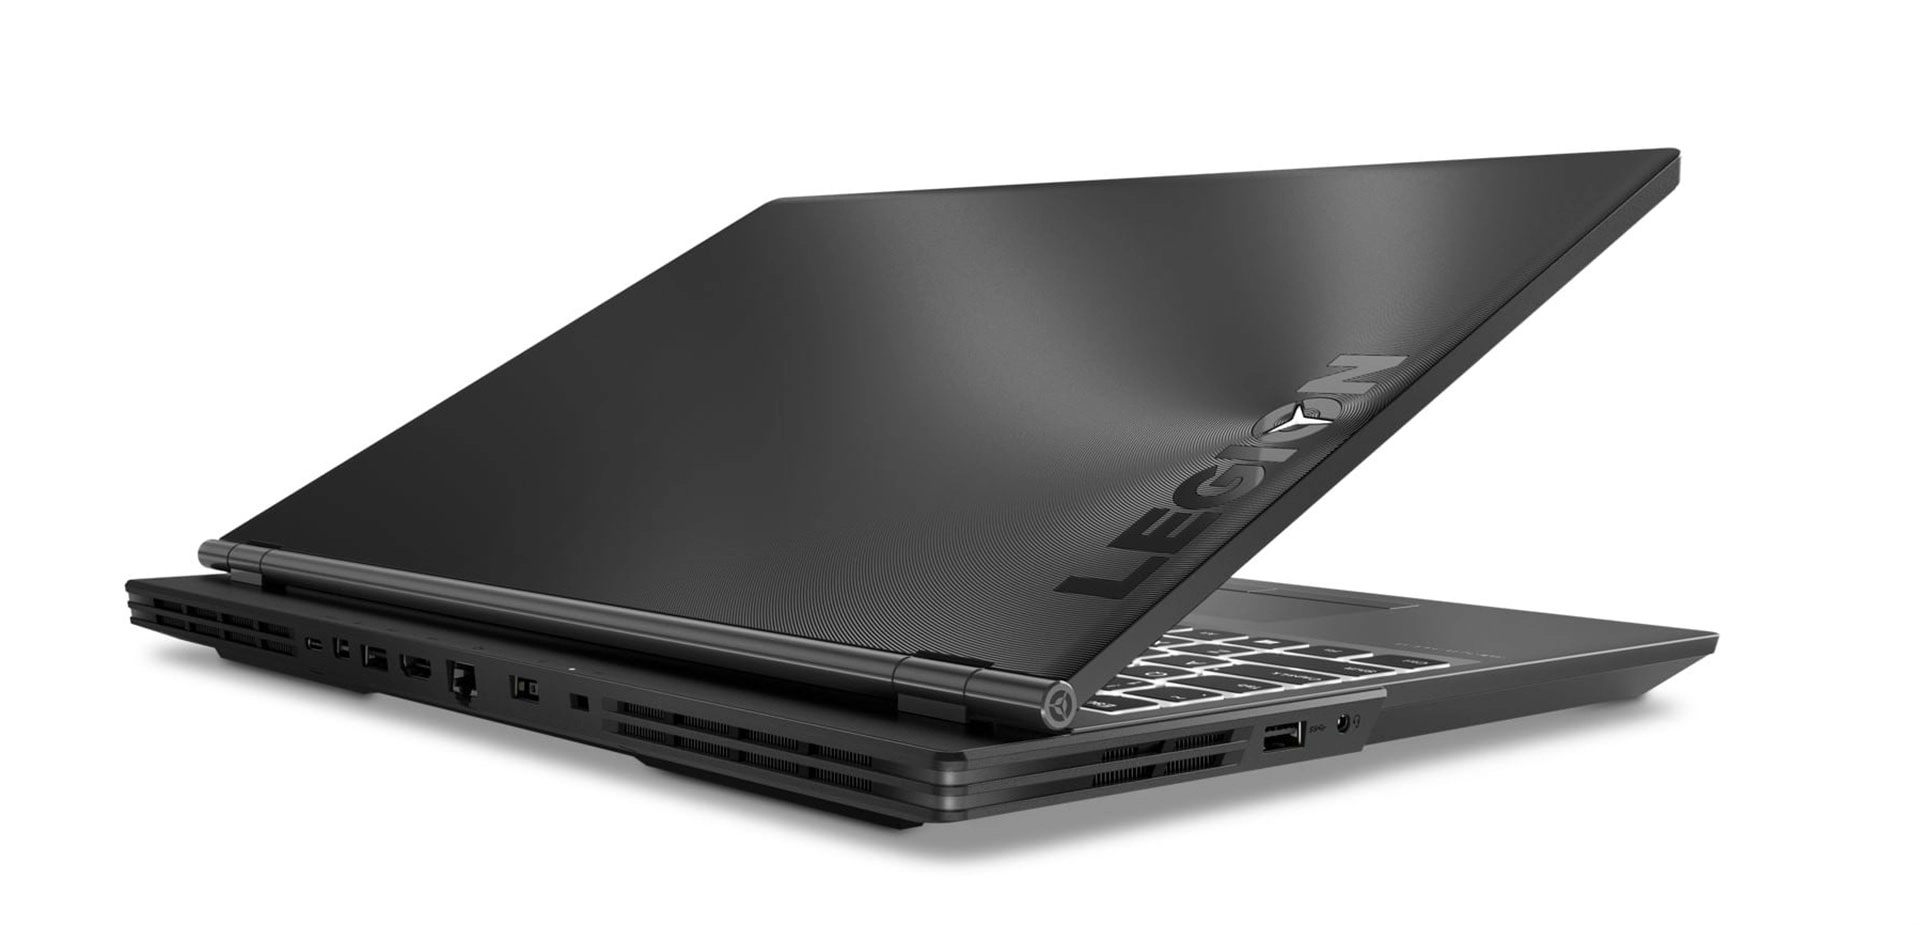 Lenovo Y540 laptop image